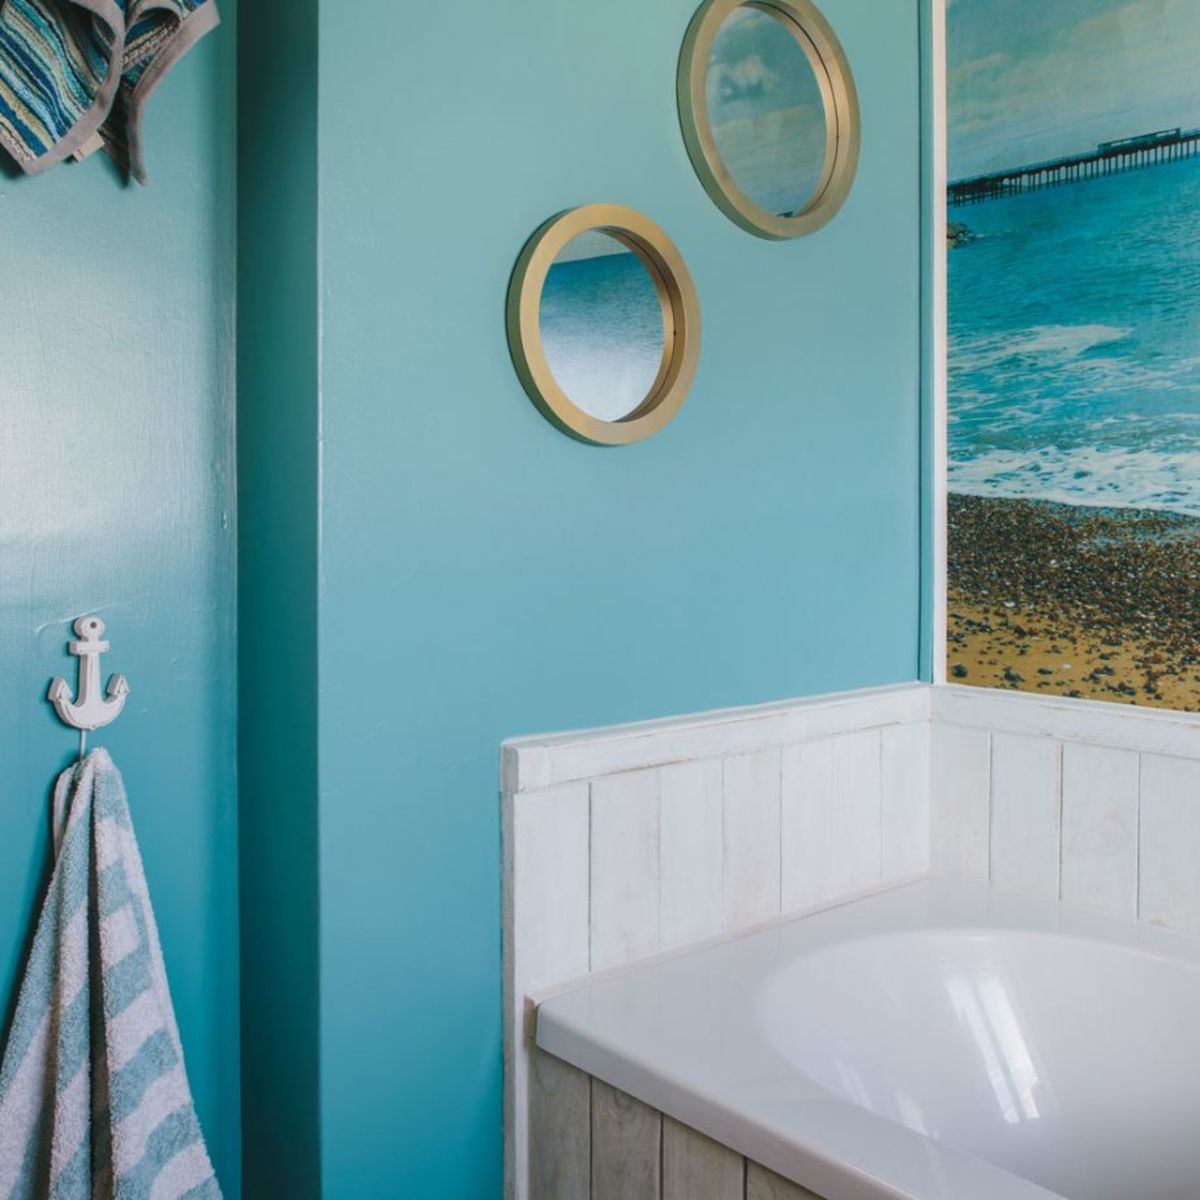 Отделка краской ванной комнаты: Покраска стен в ванной комнате вместо .